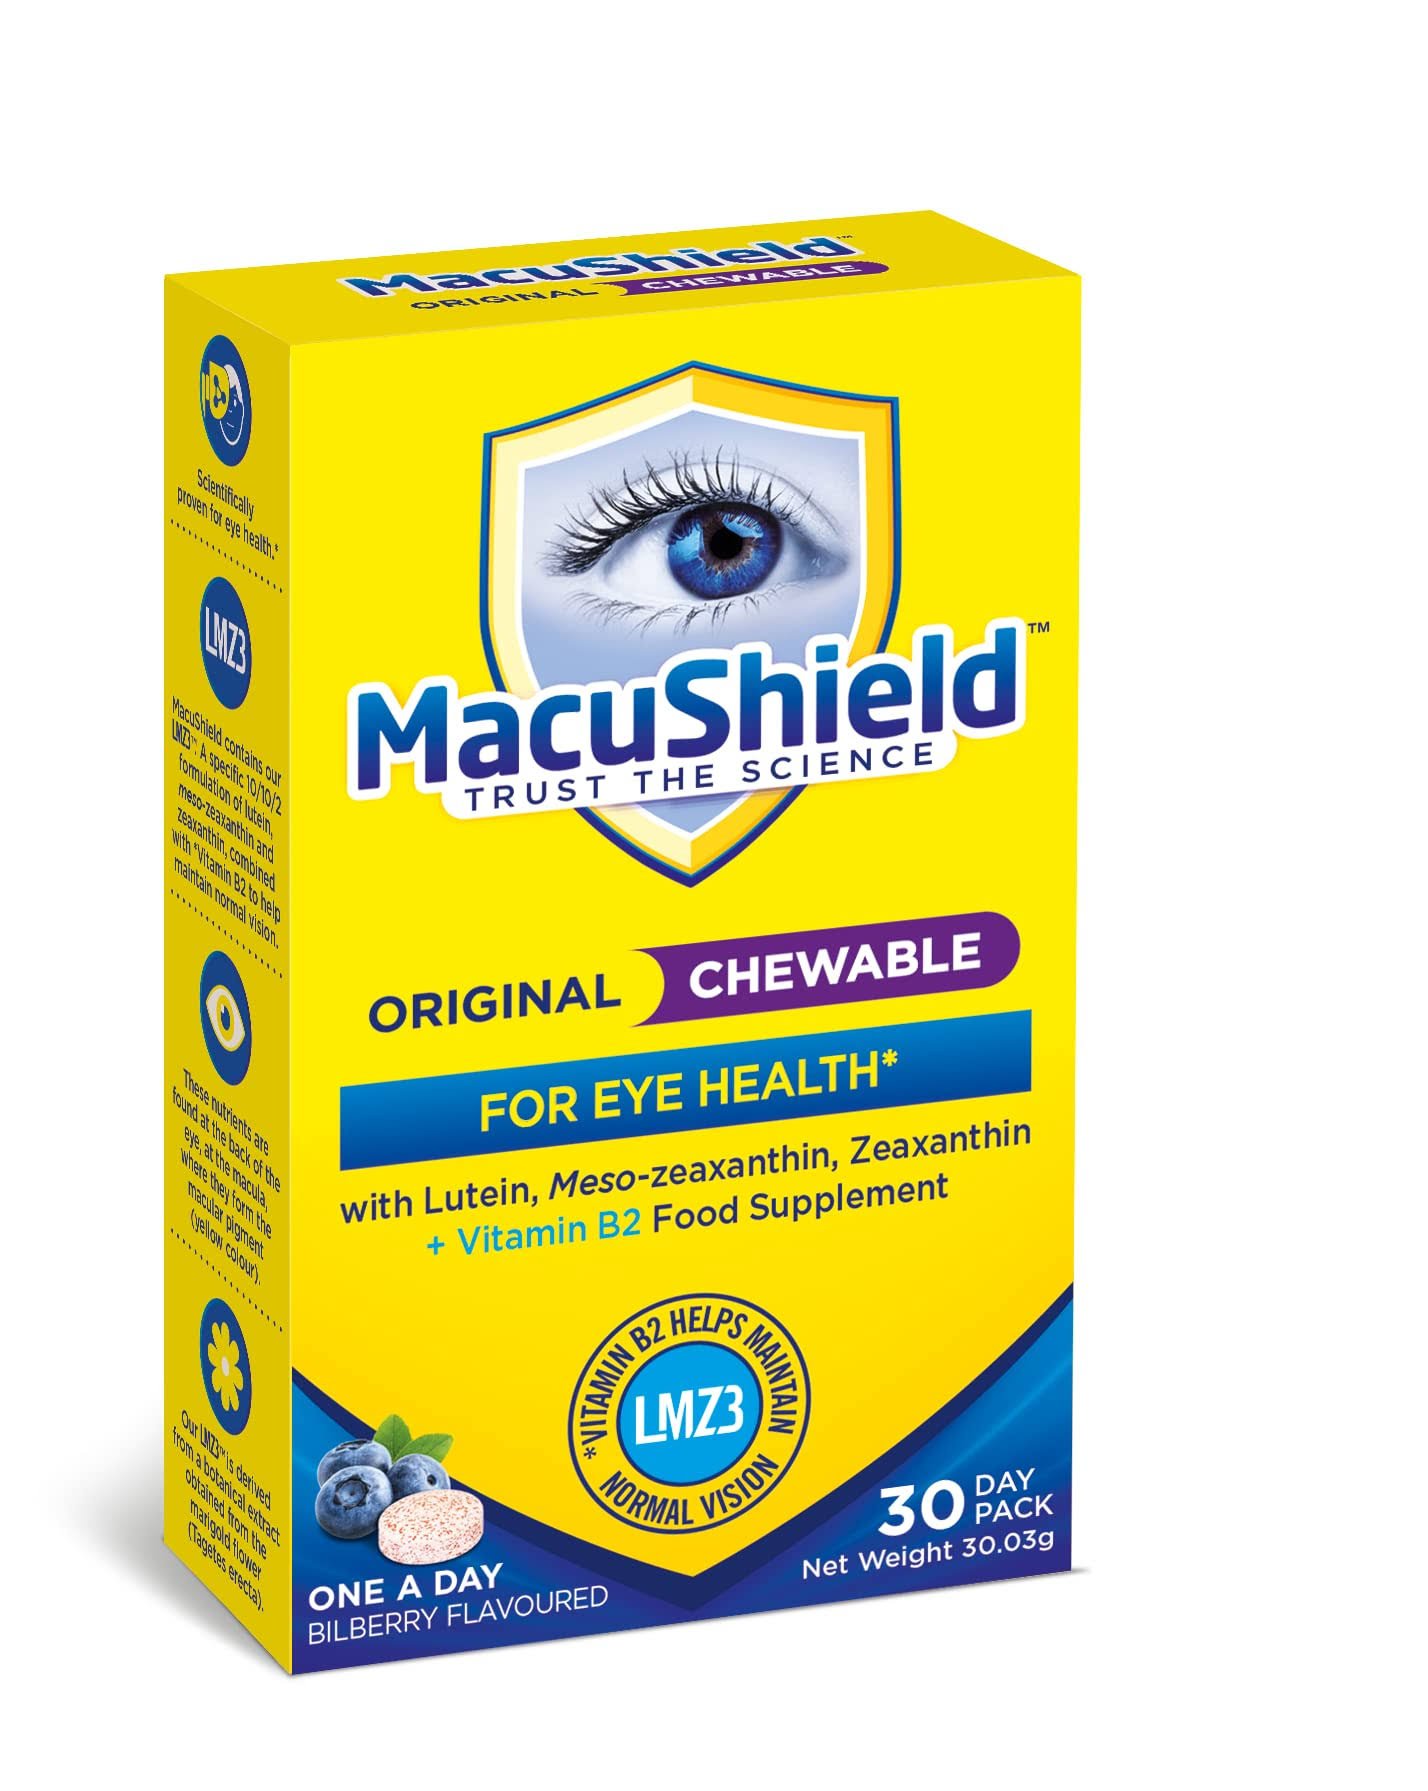 Macushield Original Chewable (30)